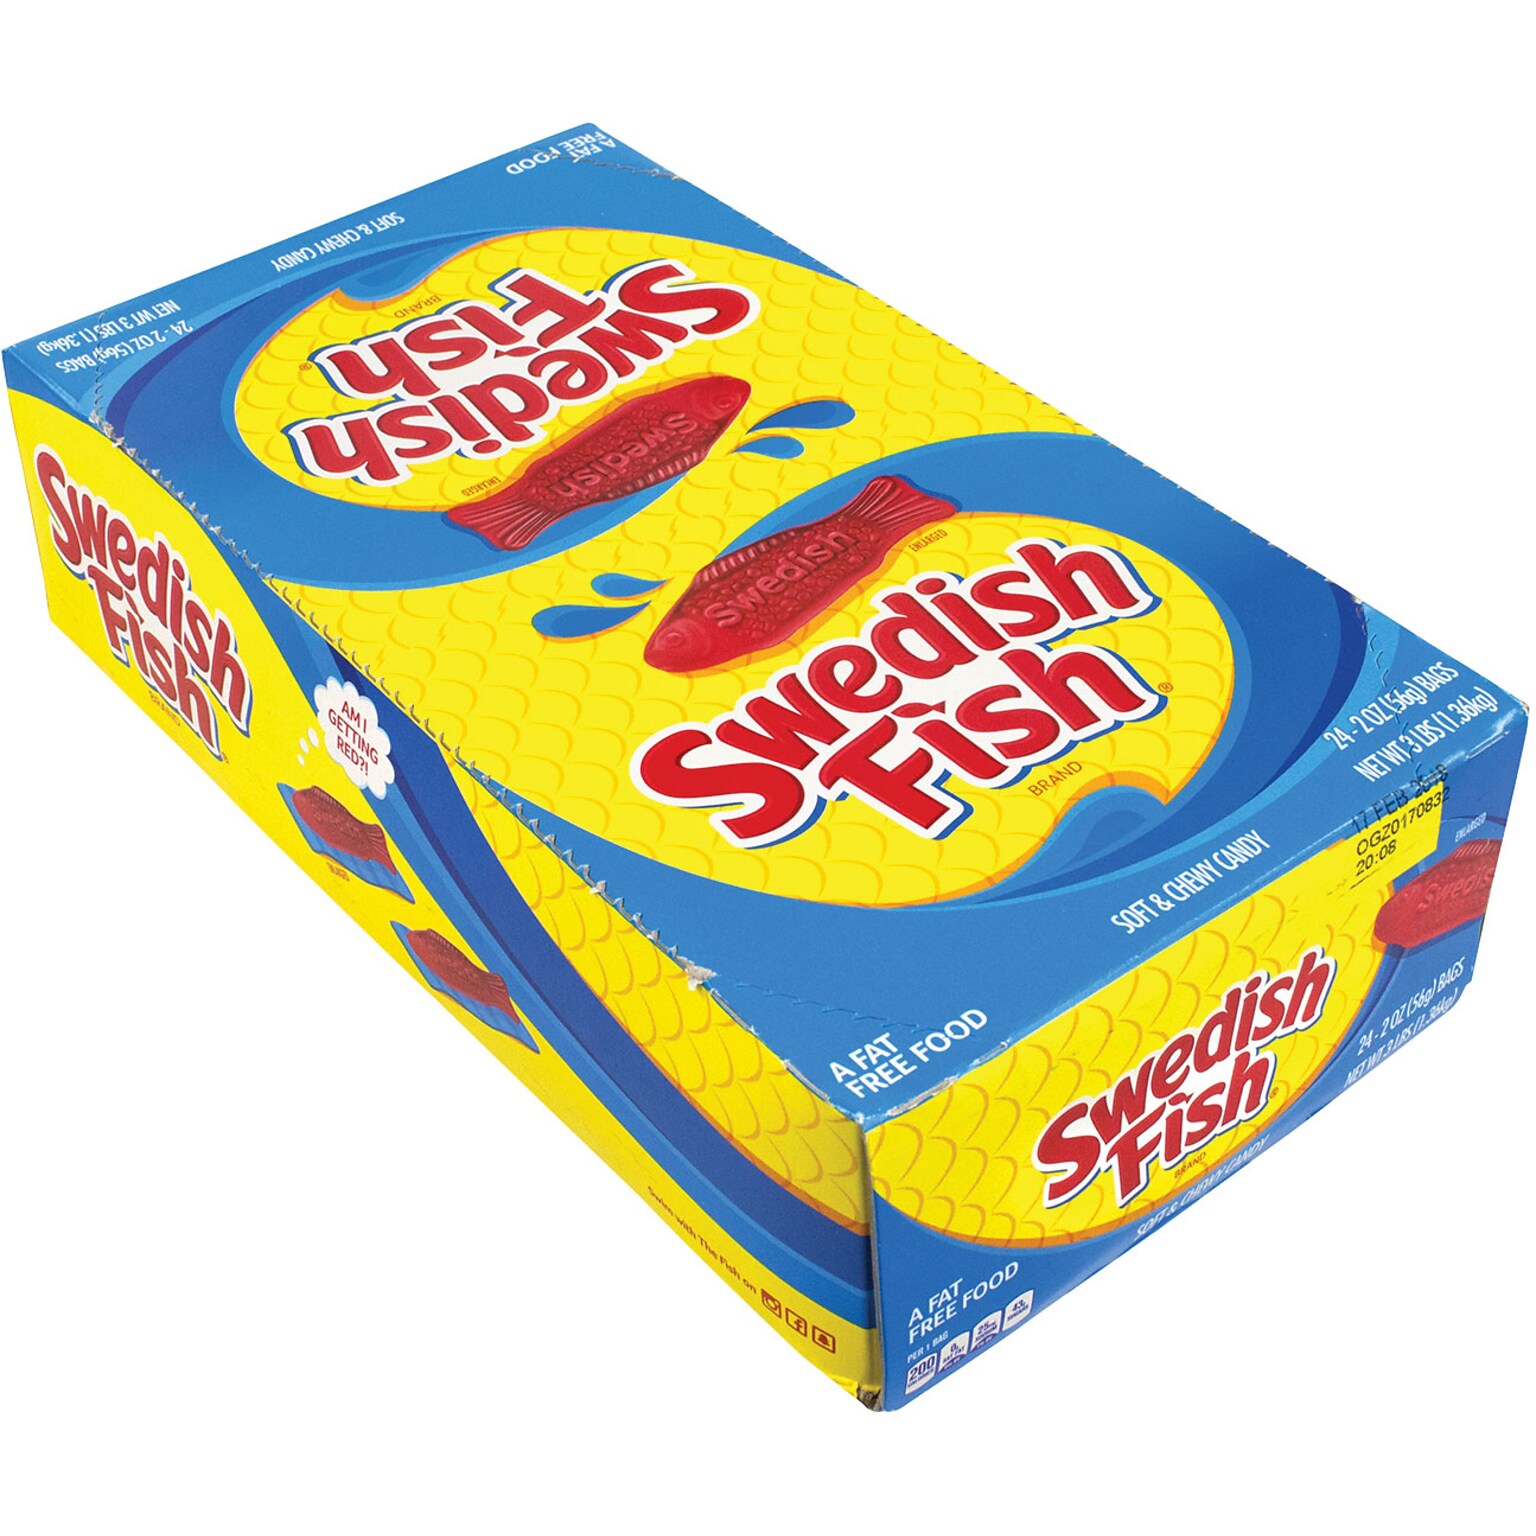 Swedish Fish, 2 oz, 24 Count Pack (304-00005)